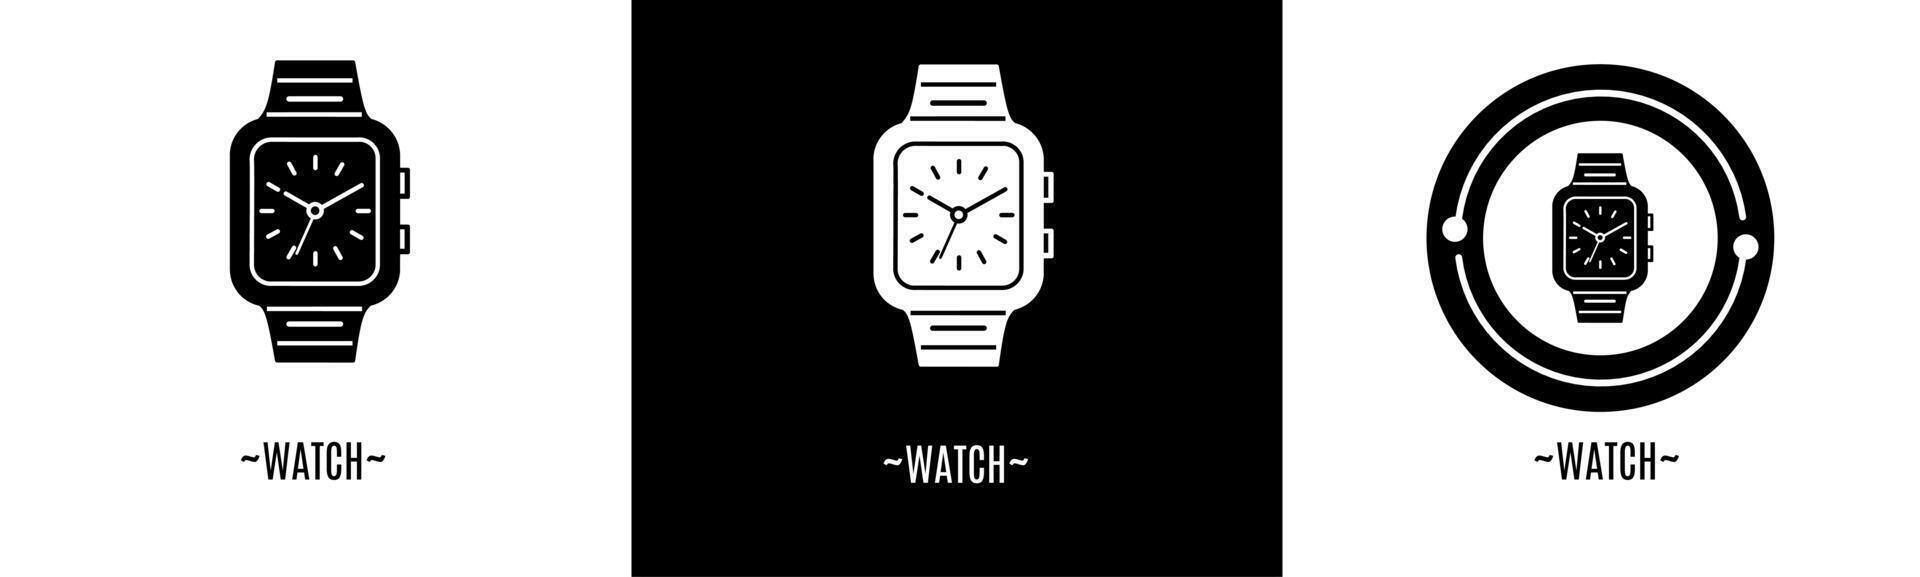 Watch logo set. Collection of black and white logos. Stock vector. vector